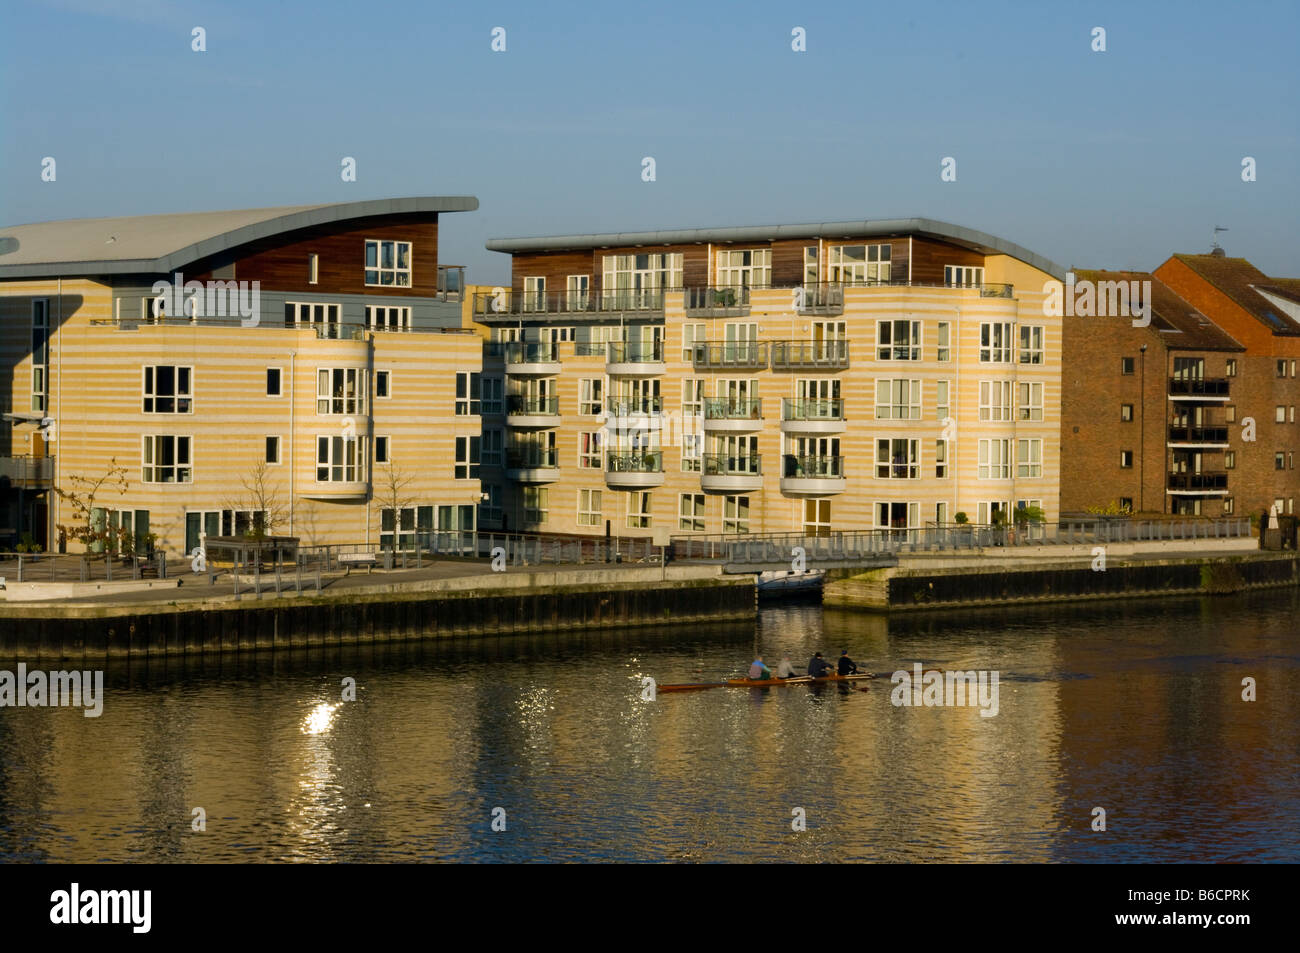 The River Thames By modern Riverside waterfront Apartments Hampton Wick Stock Photo